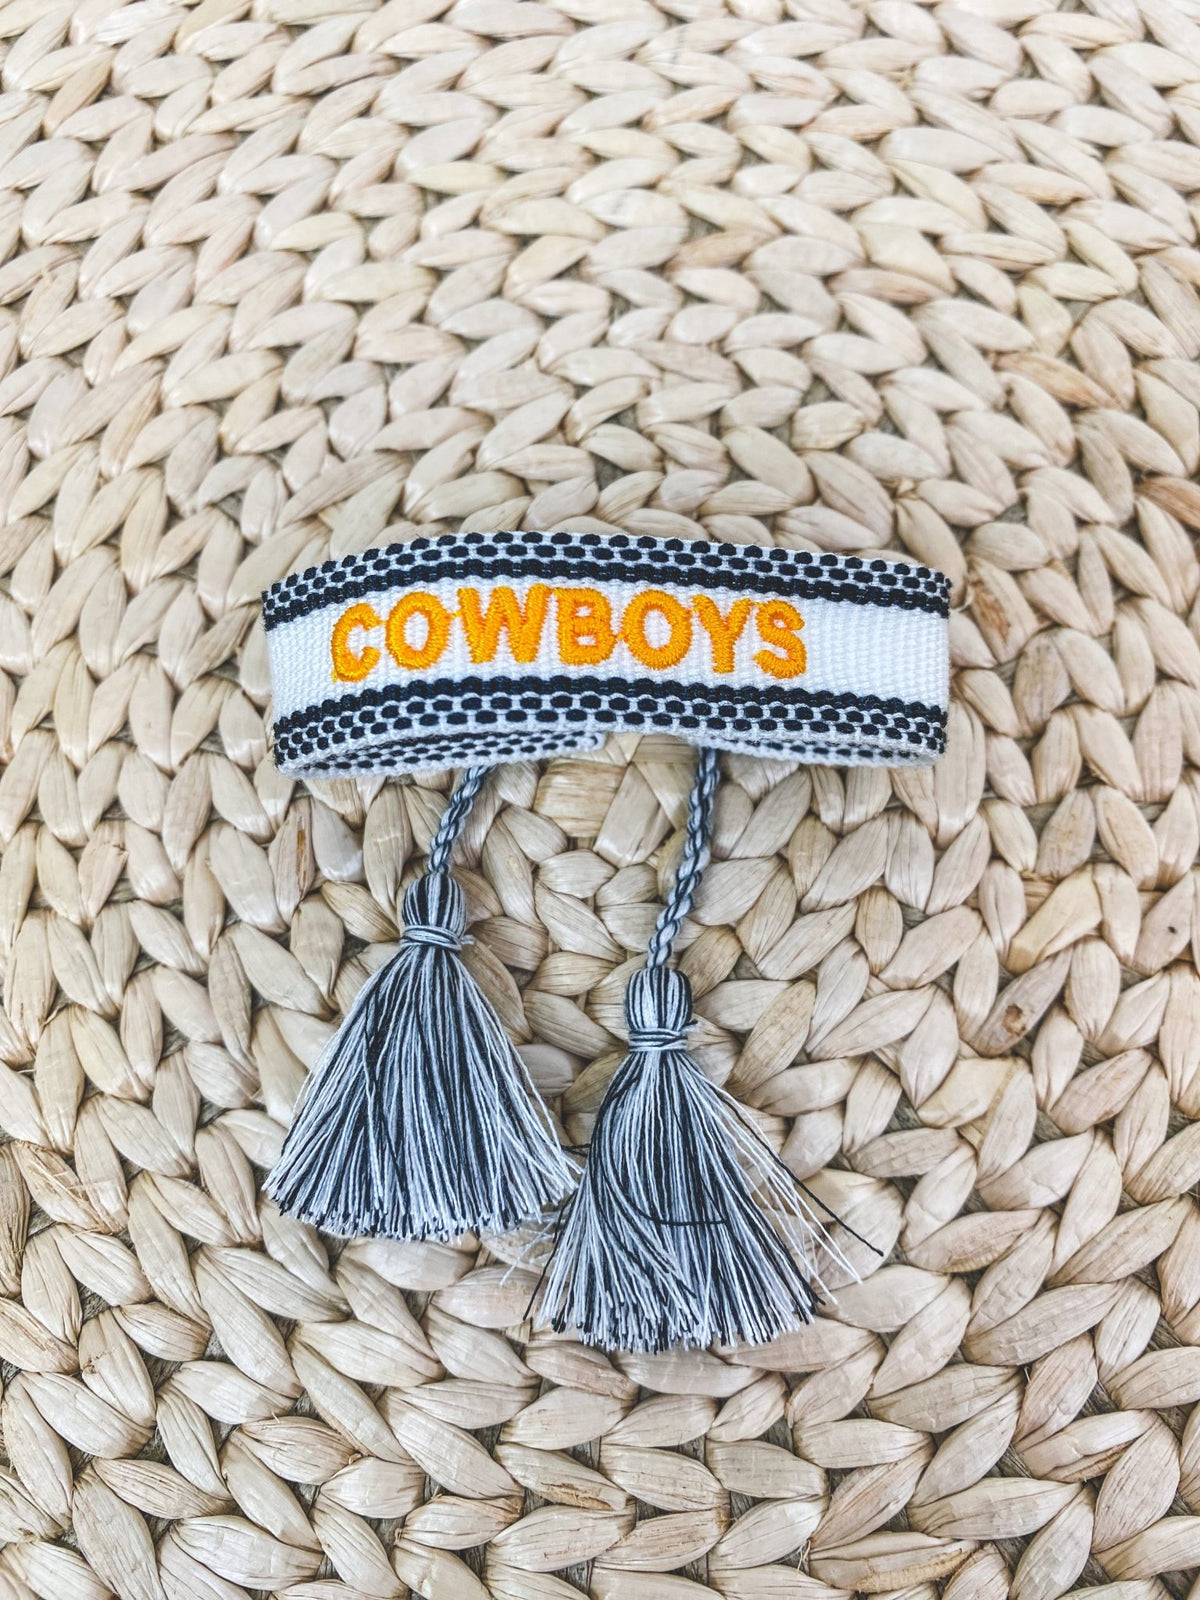 Cowboys tassel bracelet black/orange - Stylish Bracelets - Affordable Jewelry and Belts at Lush Fashion Lounge Boutique in Oklahoma City